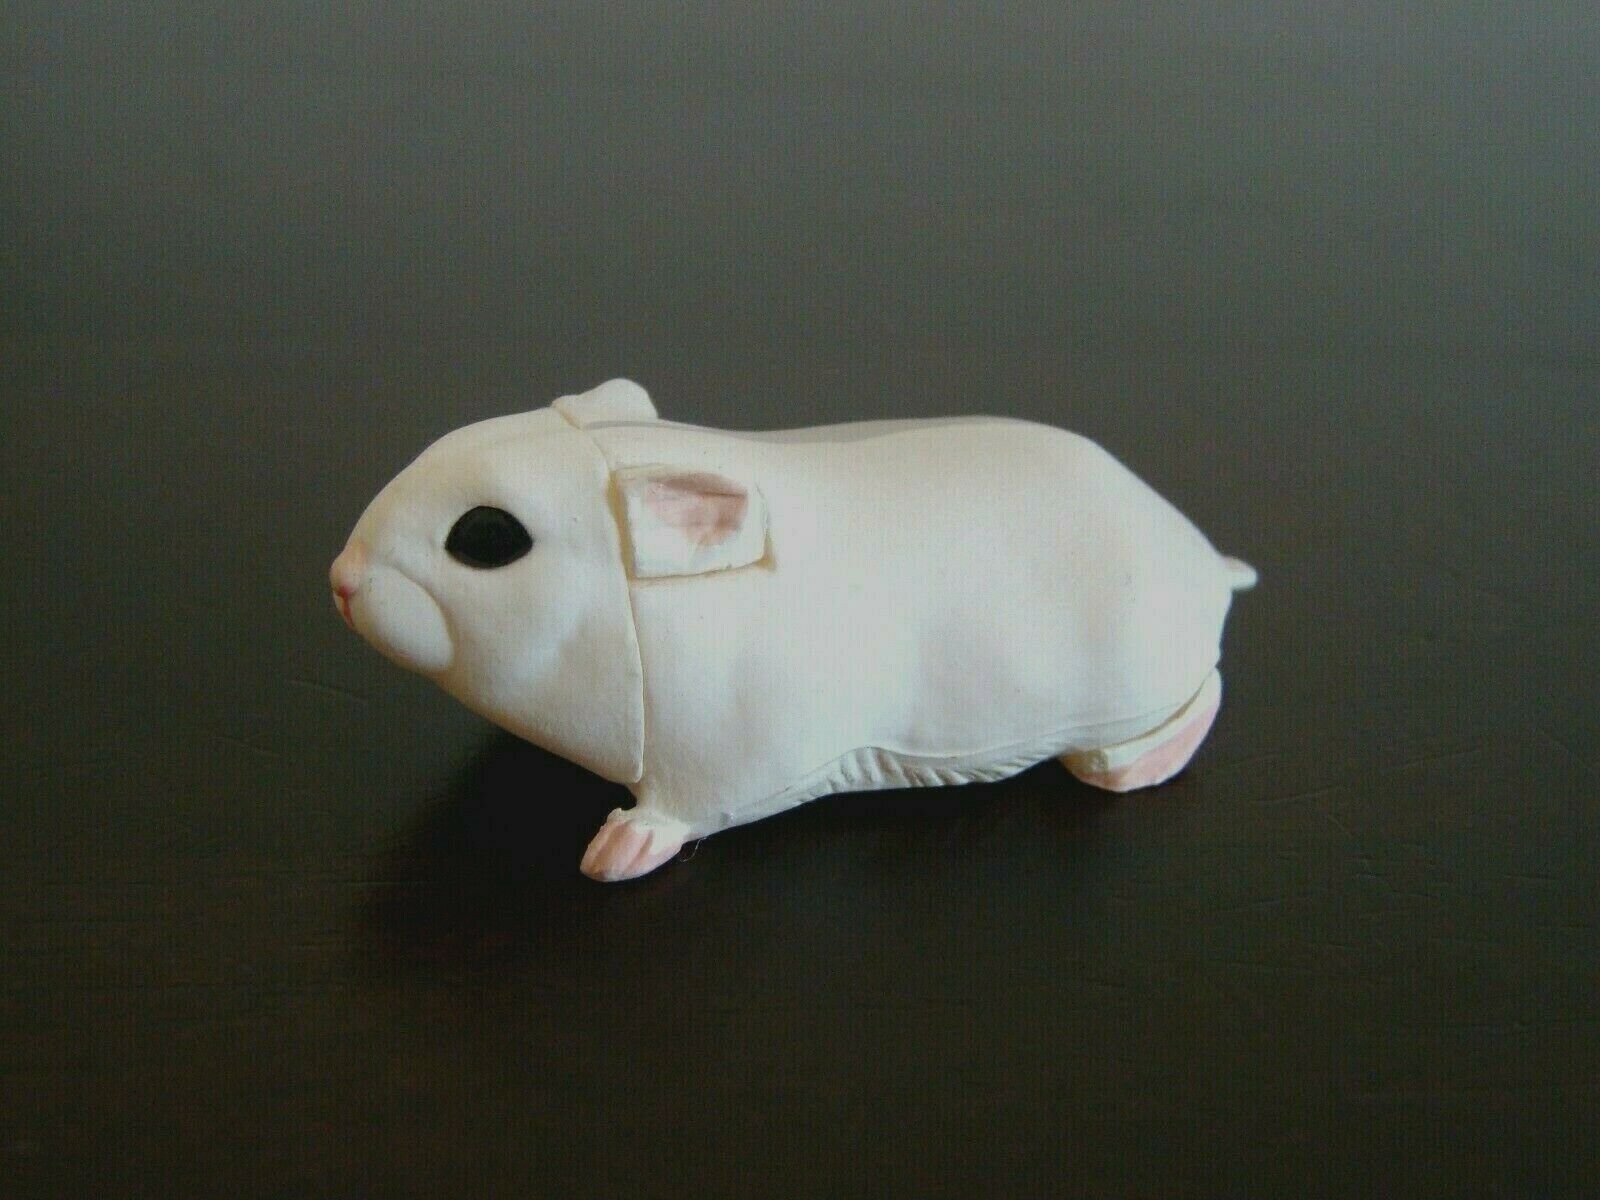 New Kaiyodo Furuta Japan Choco Egg Animal Puzzle Miniature White Hamster Mouse